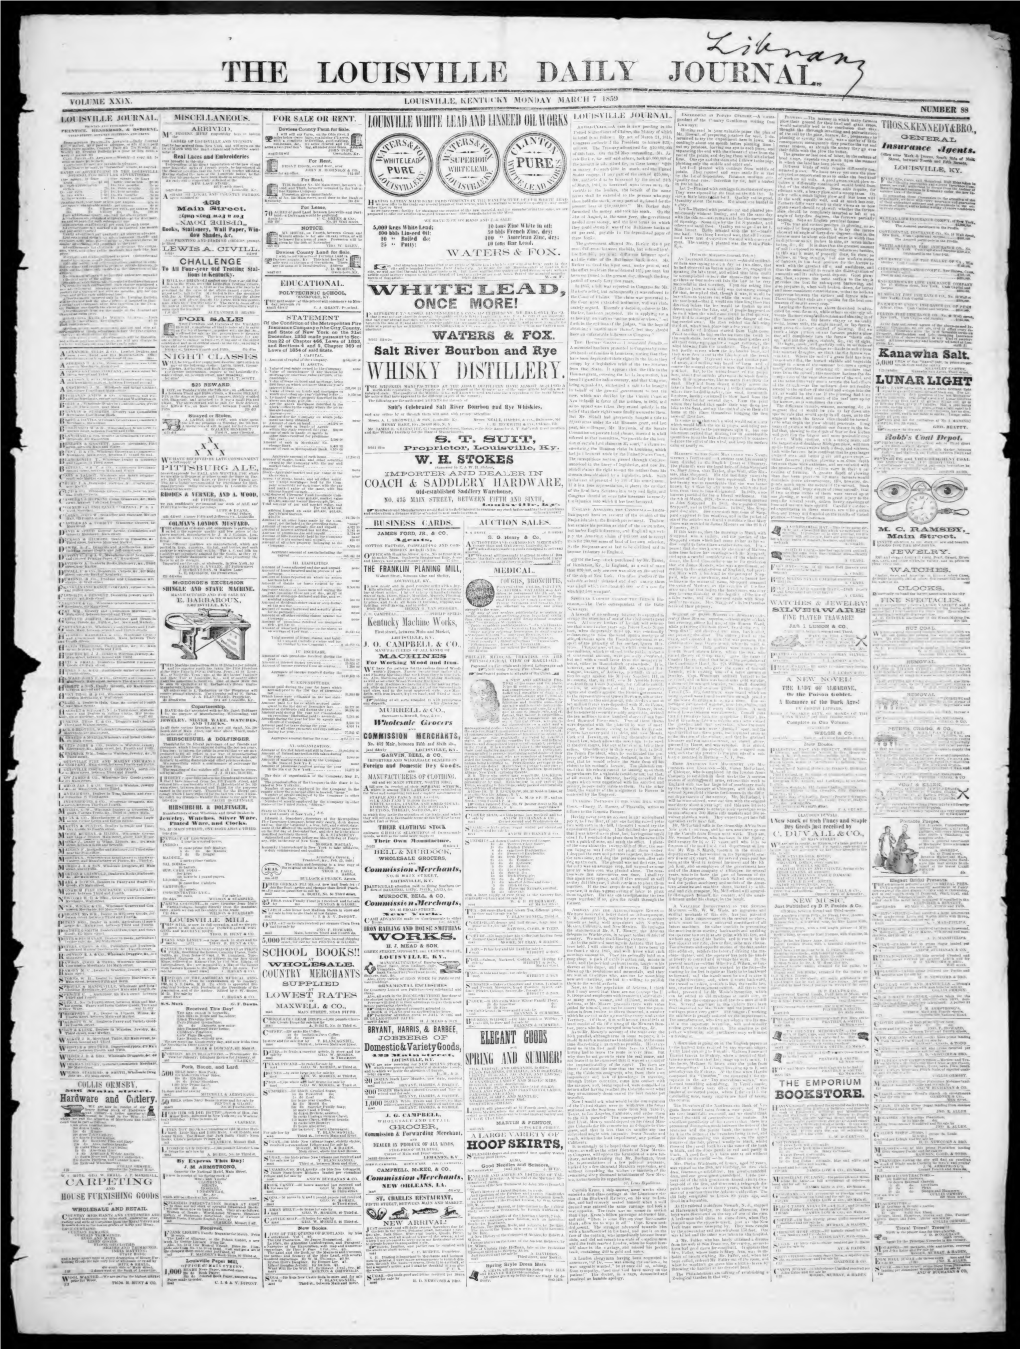 Louisville Daily Journal (Louisville, Ky. : 1833): 1859-03-07